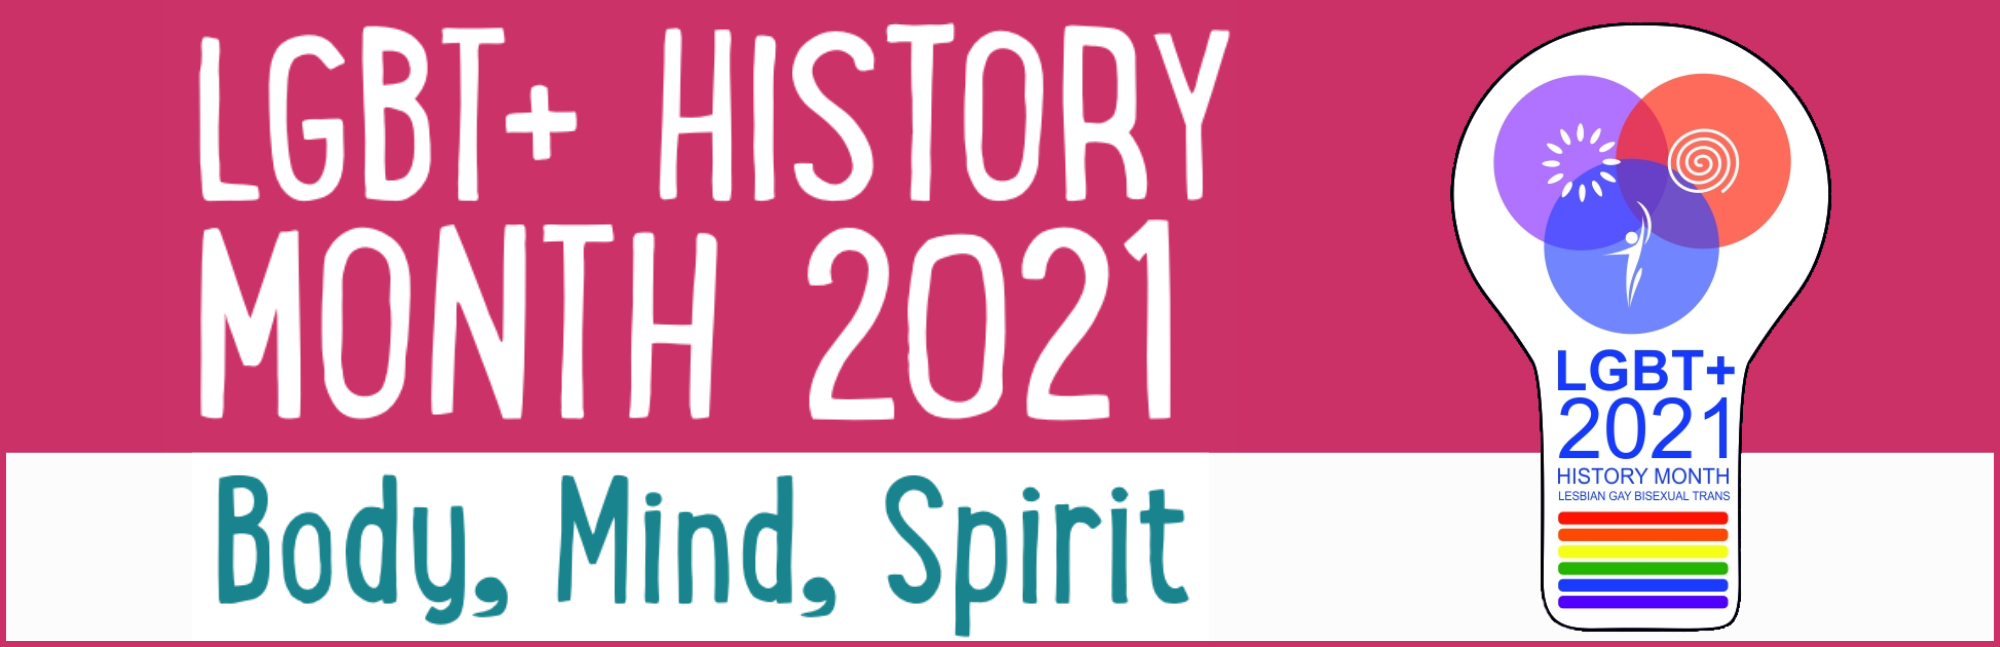 LGBT+ month 2021 Banner